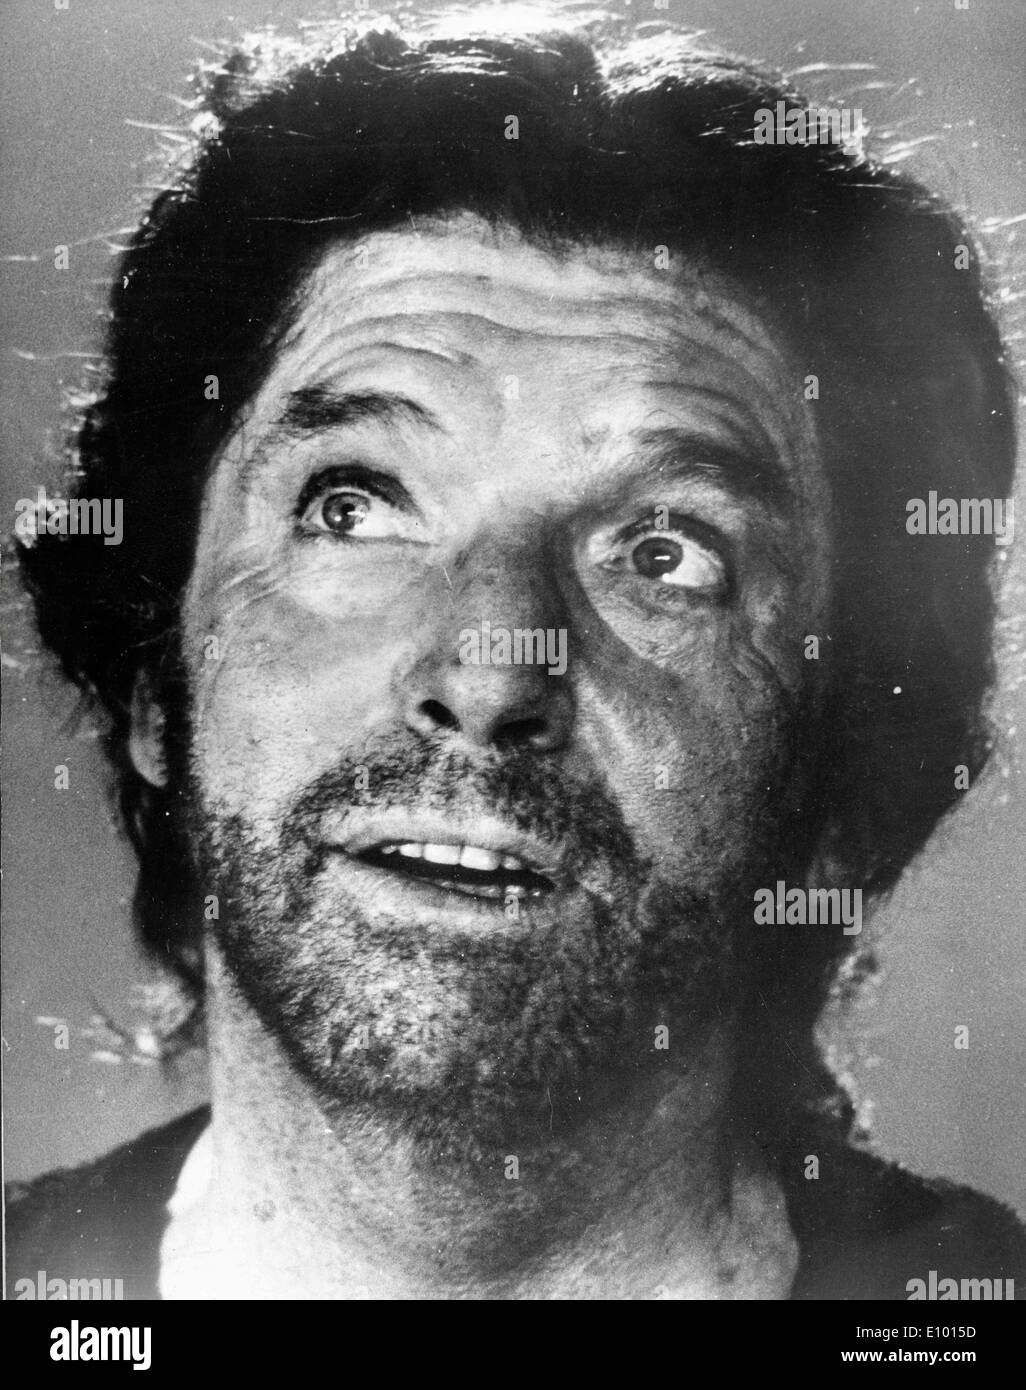 Actor Burt Lancaster as Moses Stock Photo - Alamy